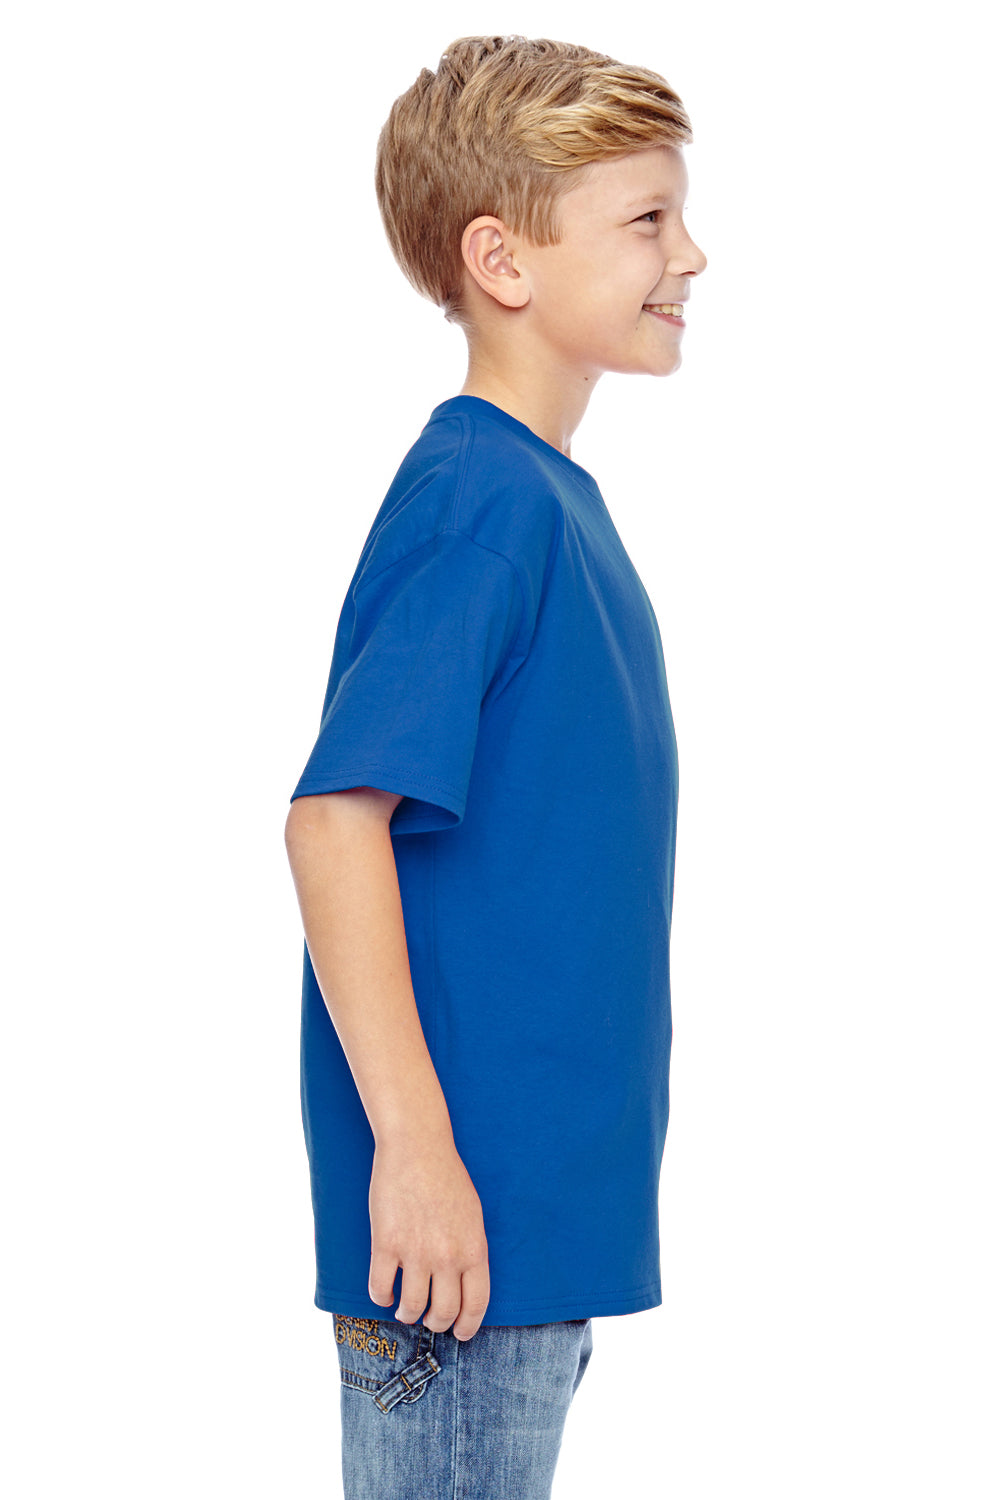 Hanes 498Y Youth Nano-T Short Sleeve Crewneck T-Shirt Royal Blue Side